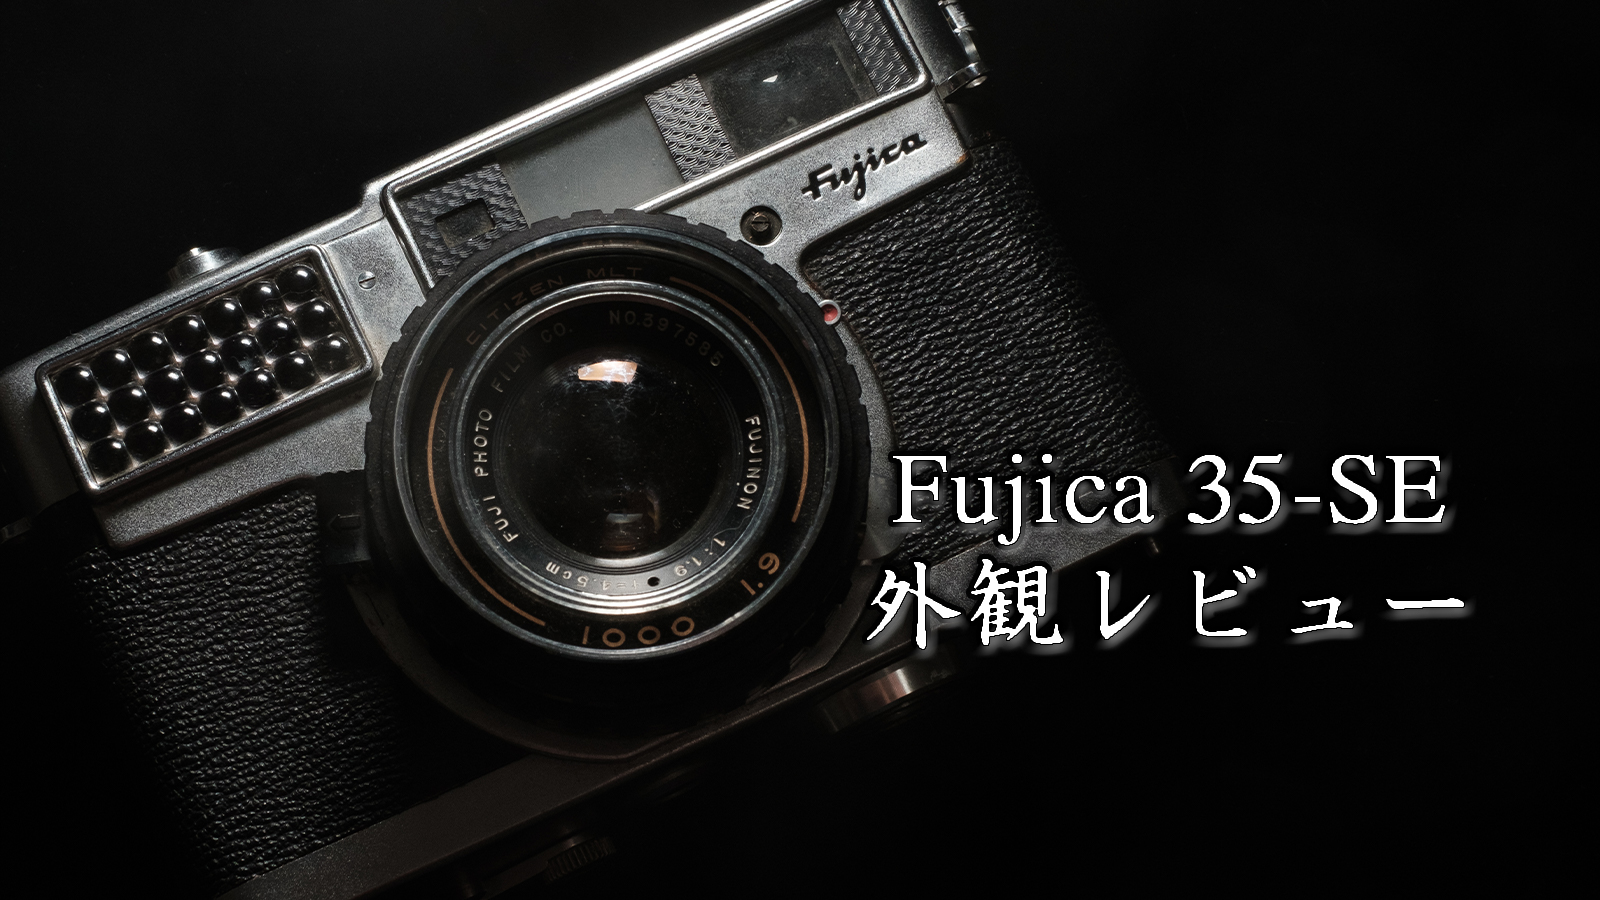 【Fujica 35-SE】スペックと外観レビュー。そして怒りの購入裏話。